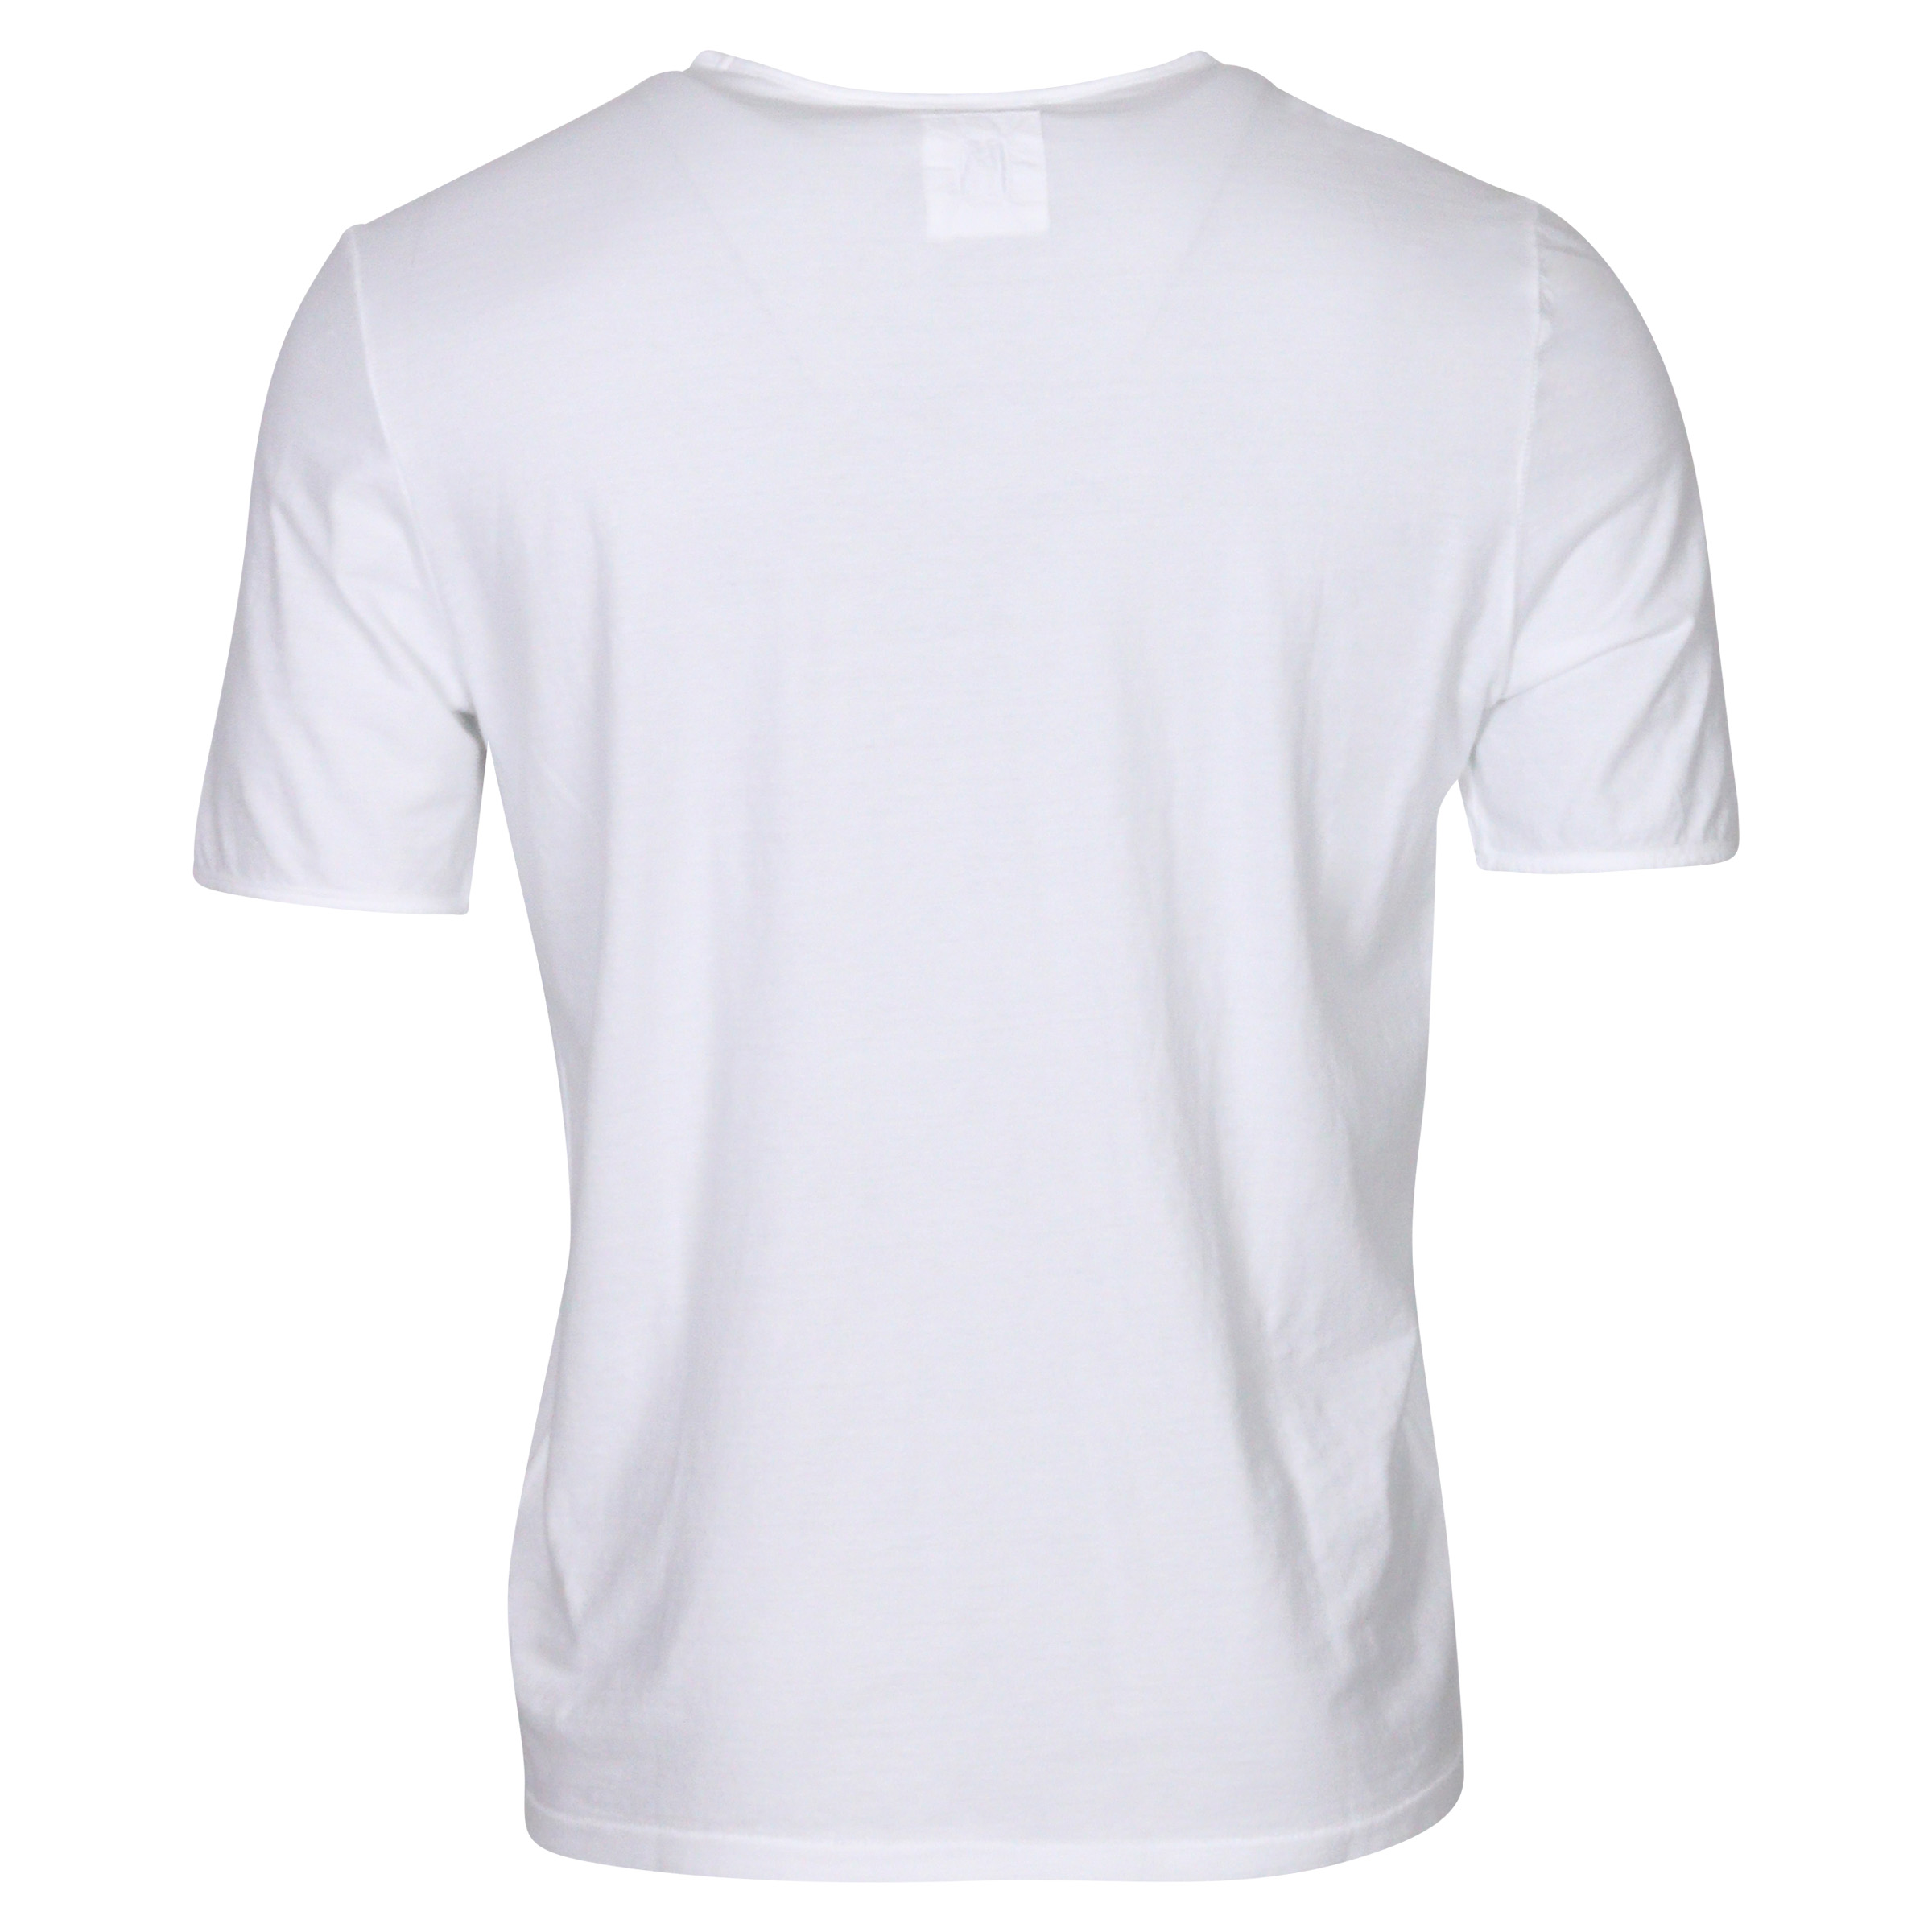 Hannes Roether T-Shirt White XXXL